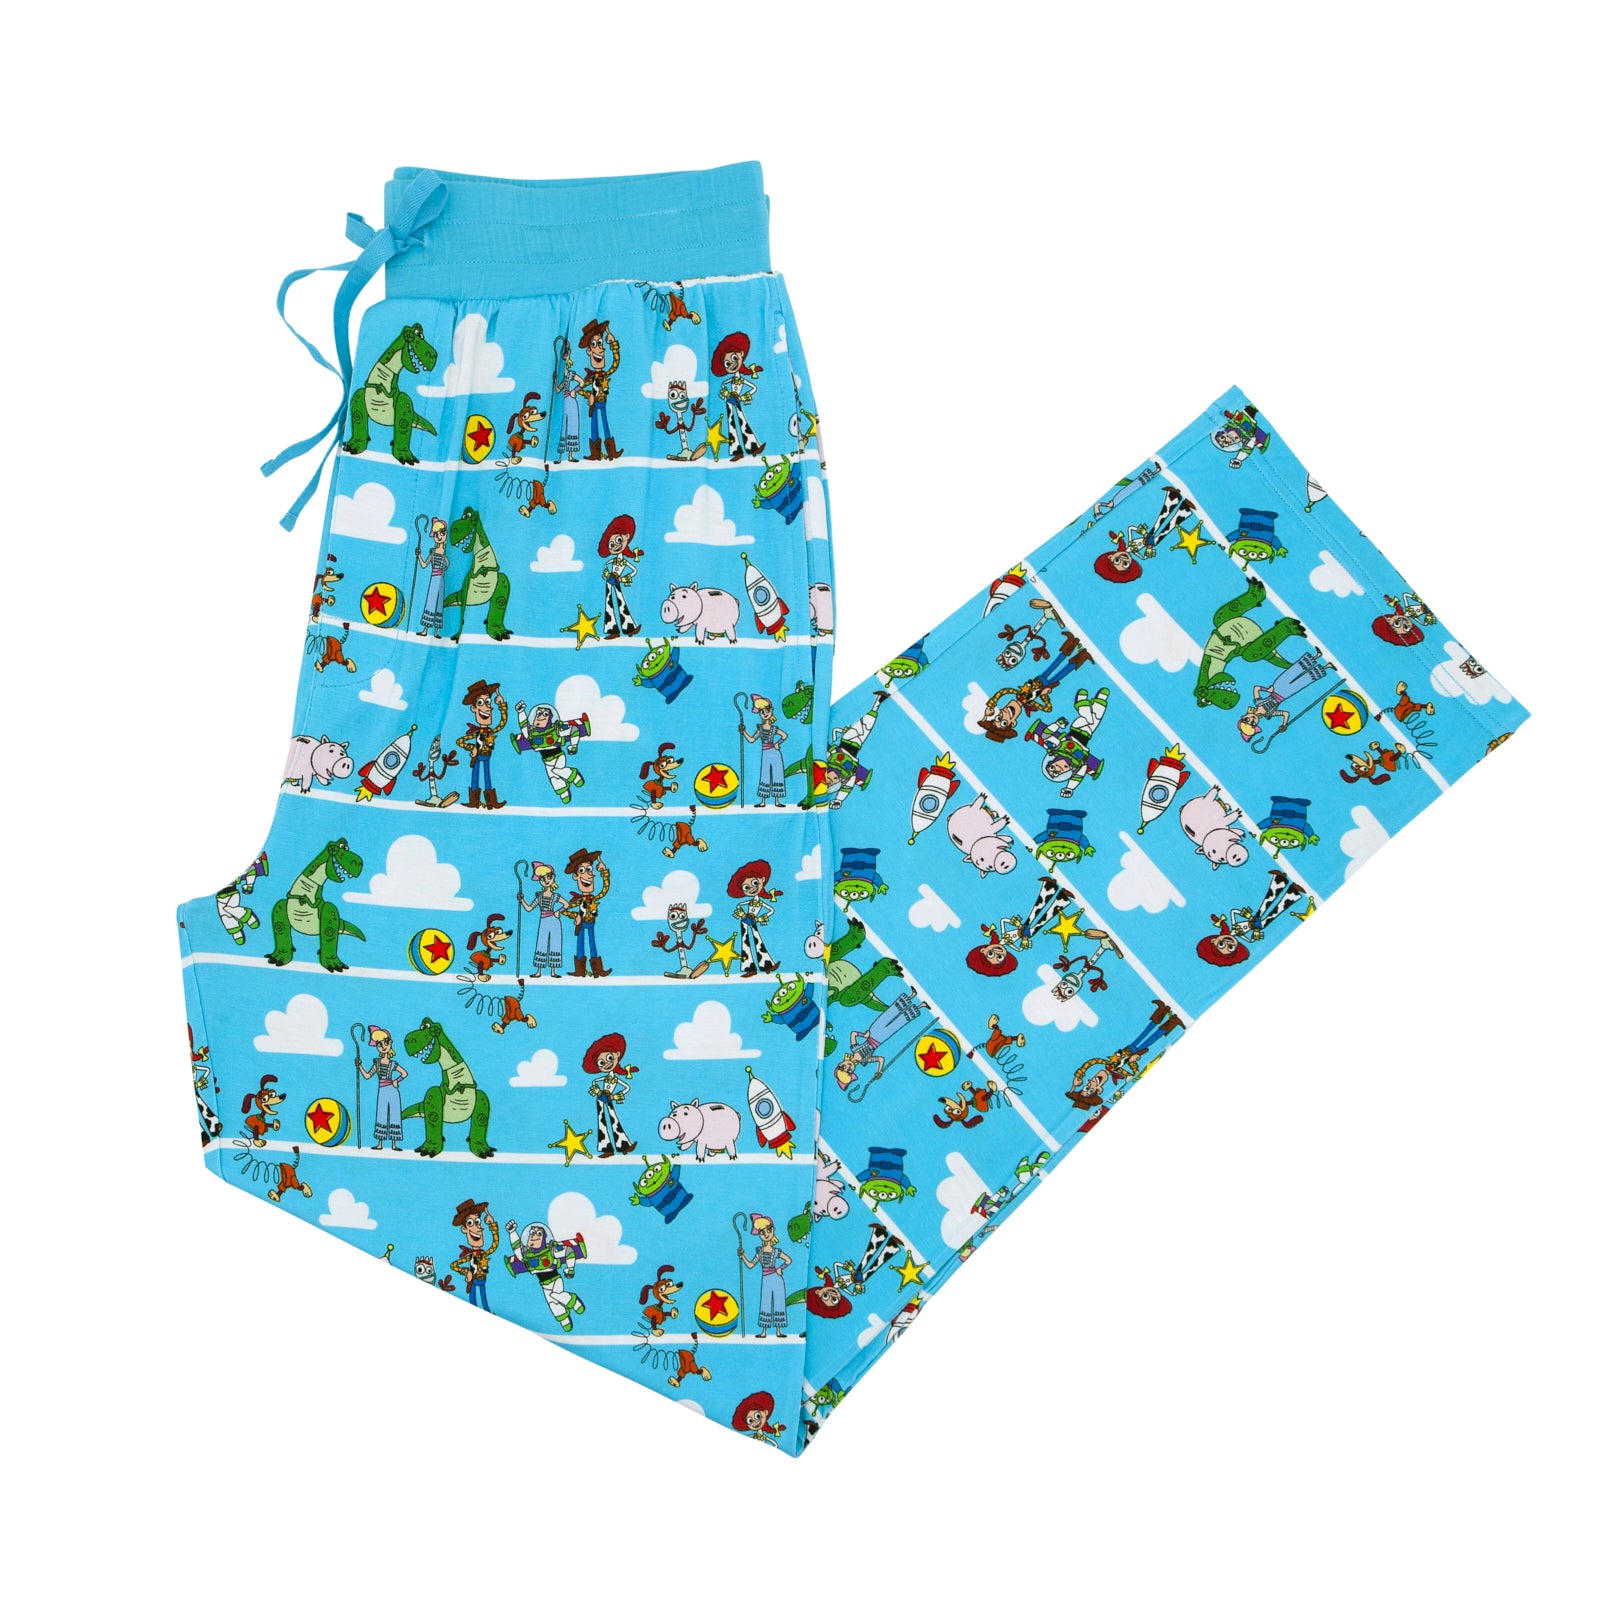 Flat lay image of Disney Pixar Toy Story Pals men's pajama pants